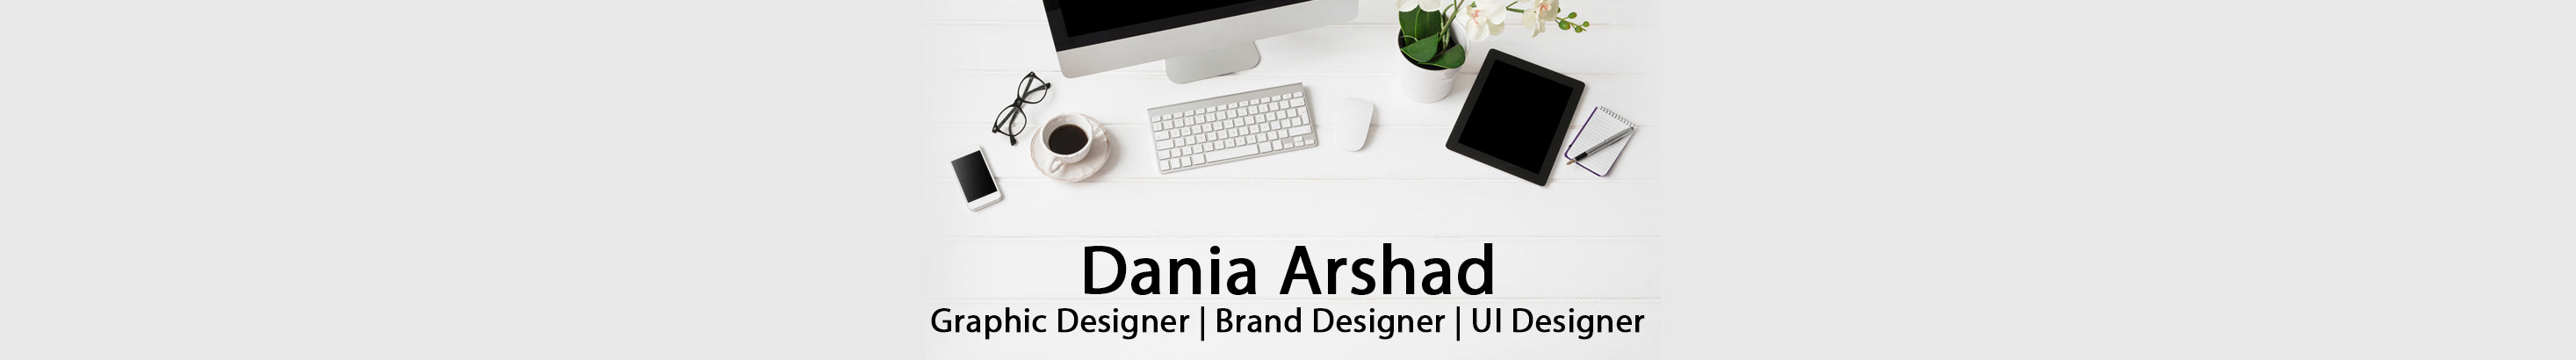 Dania Arshad's profile banner